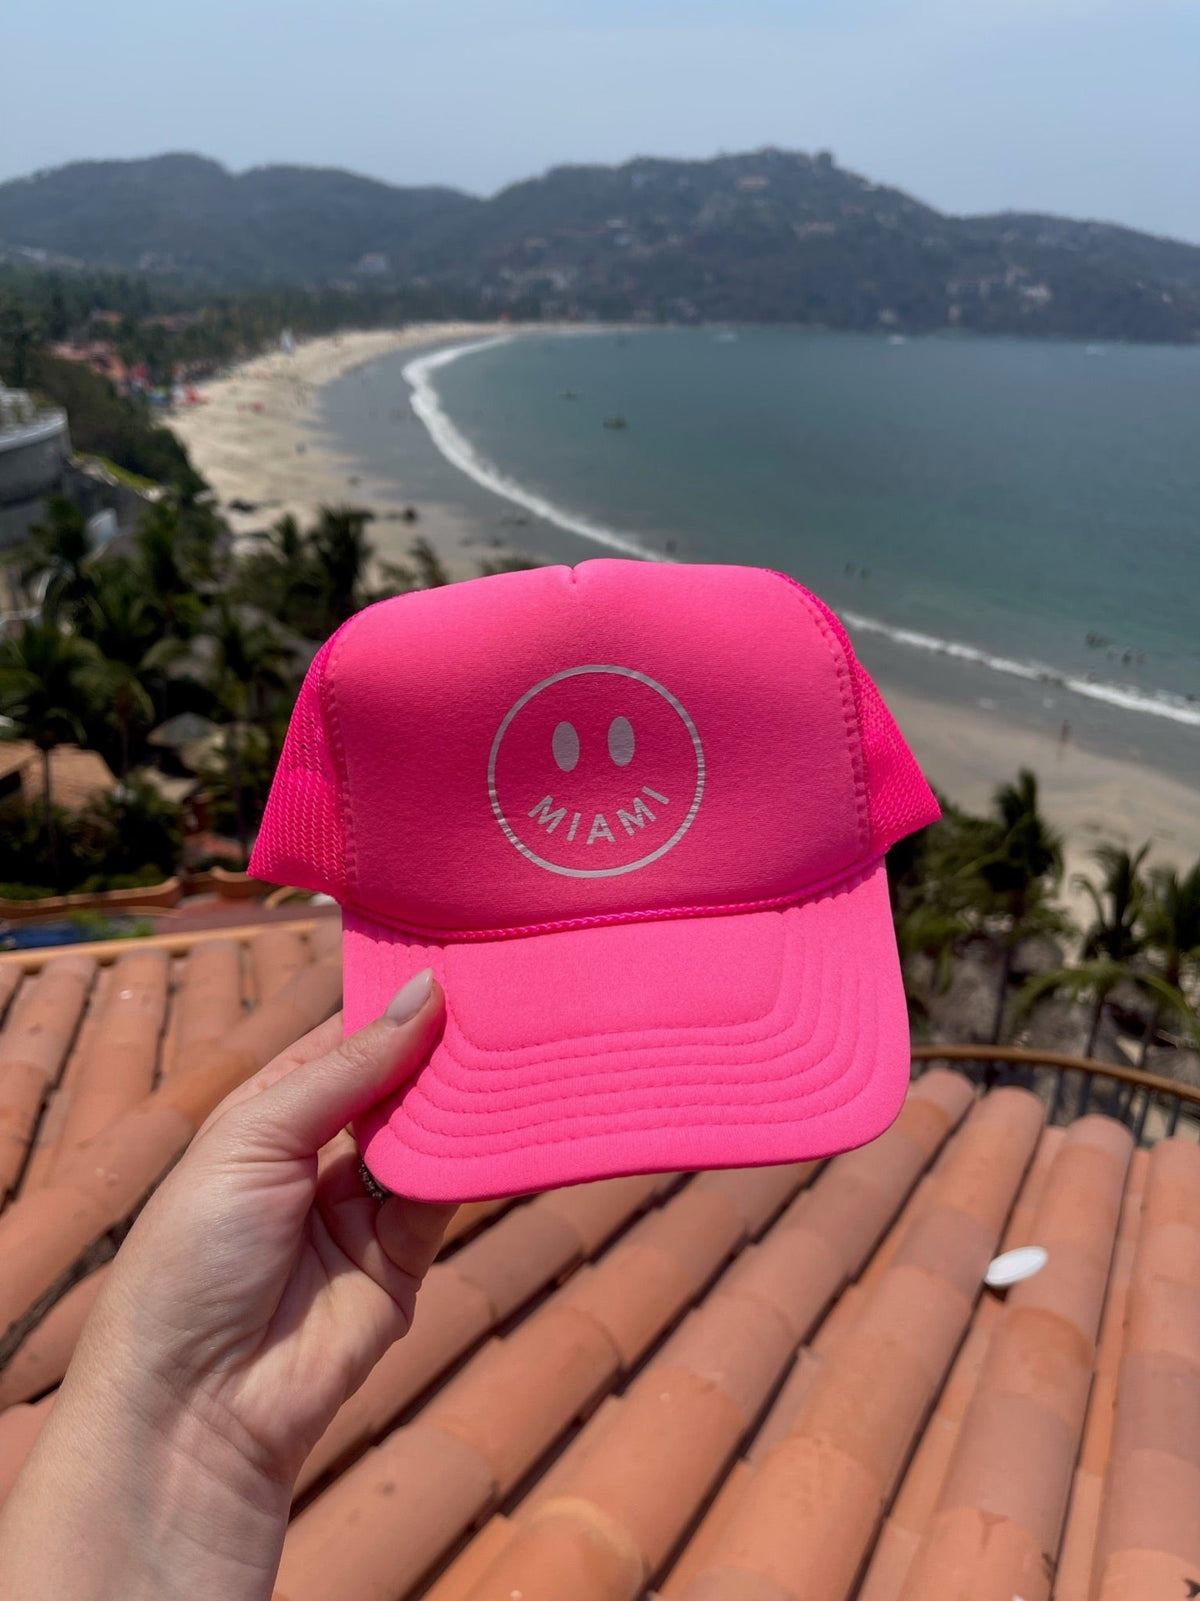 Monogrammed Trucker Hat - Sprinkled With Pink